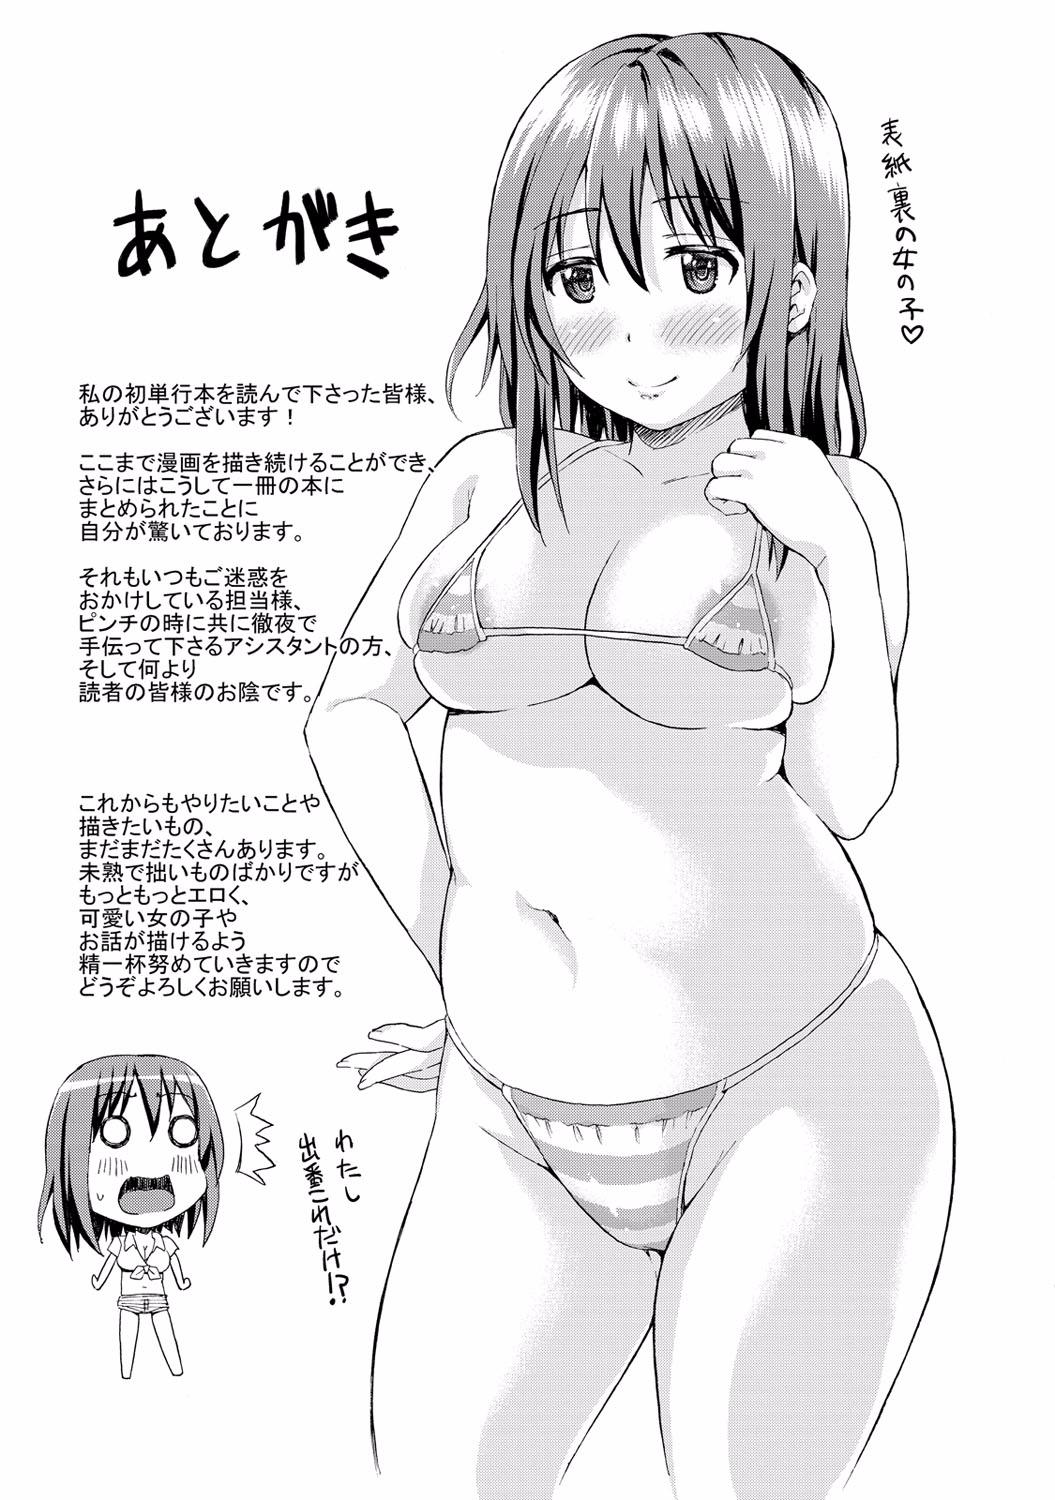 Sekai wa "Pocchari" ni Michiteiru - The World is Full of Fat Girls 191